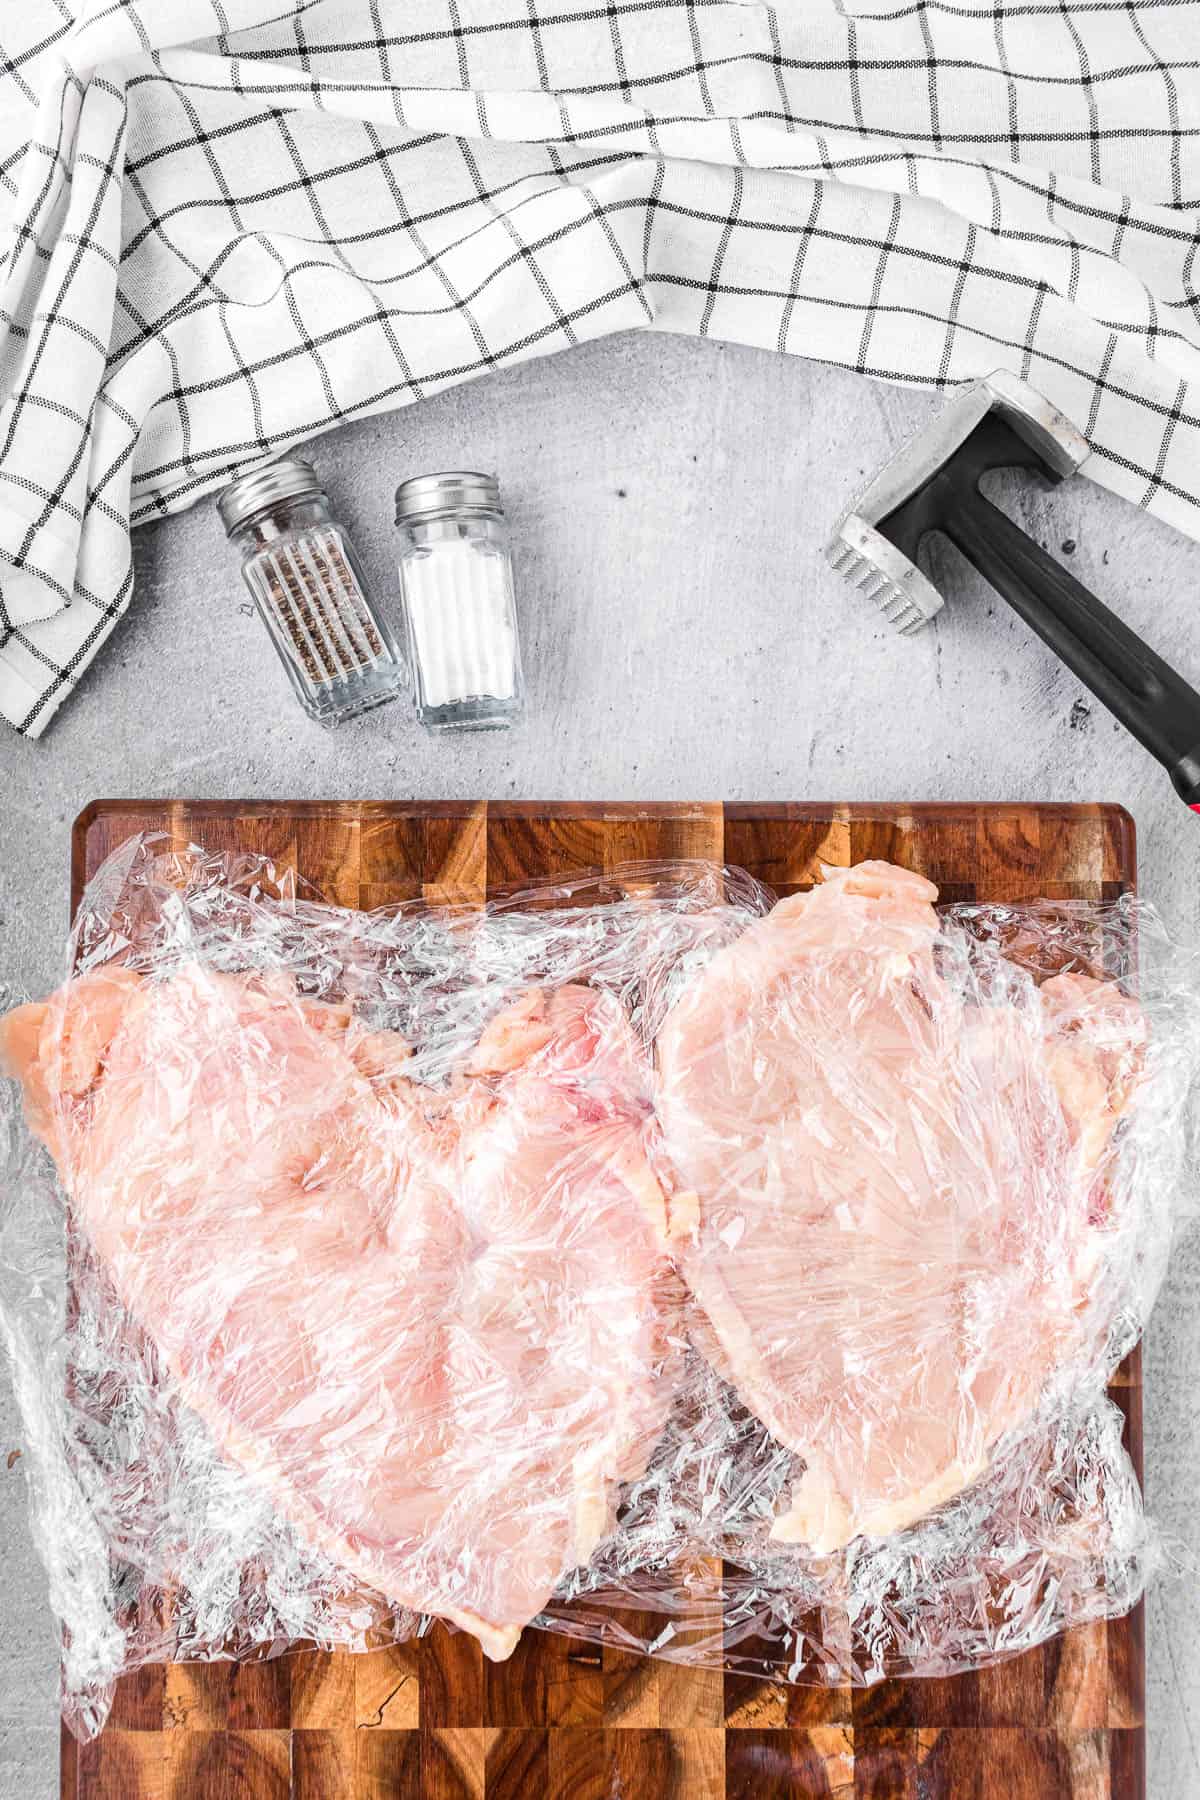 pounding chicken breasts flat in between plastic wrap.